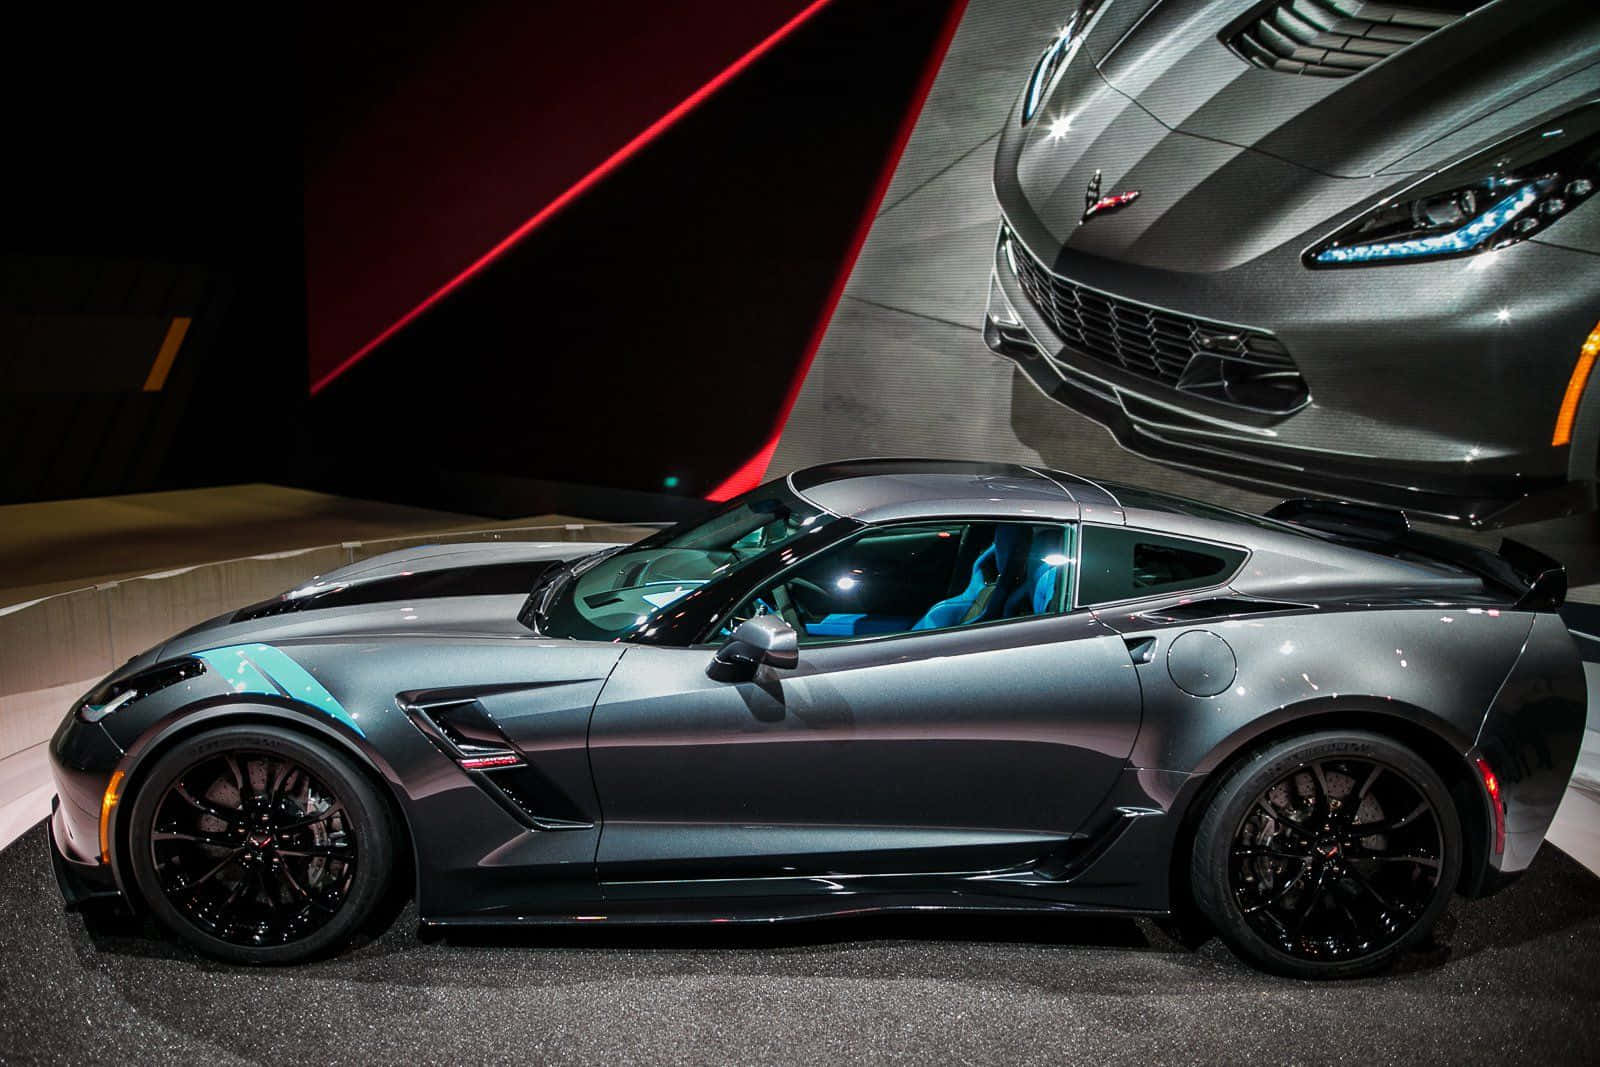 Impresionantechevrolet Corvette Grand Sport En Movimiento Fondo de pantalla